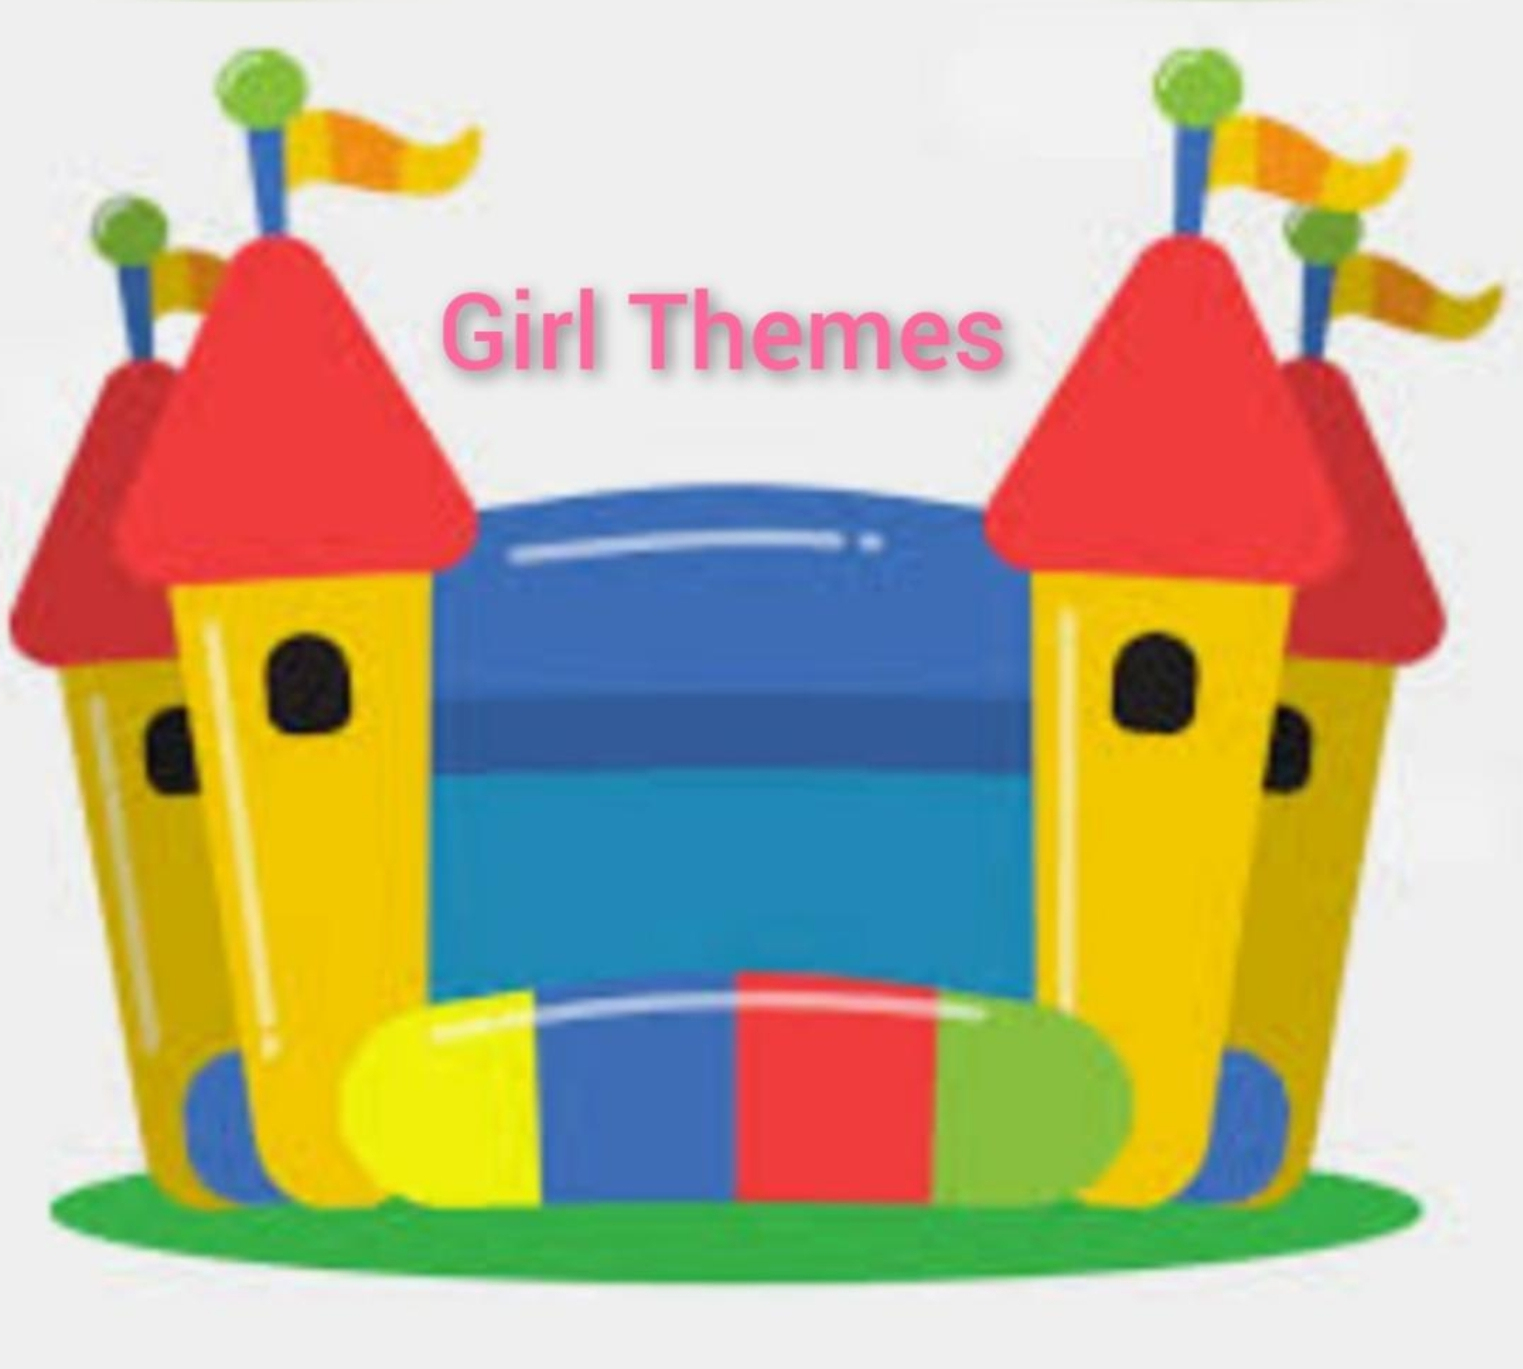 Girl’s Themes